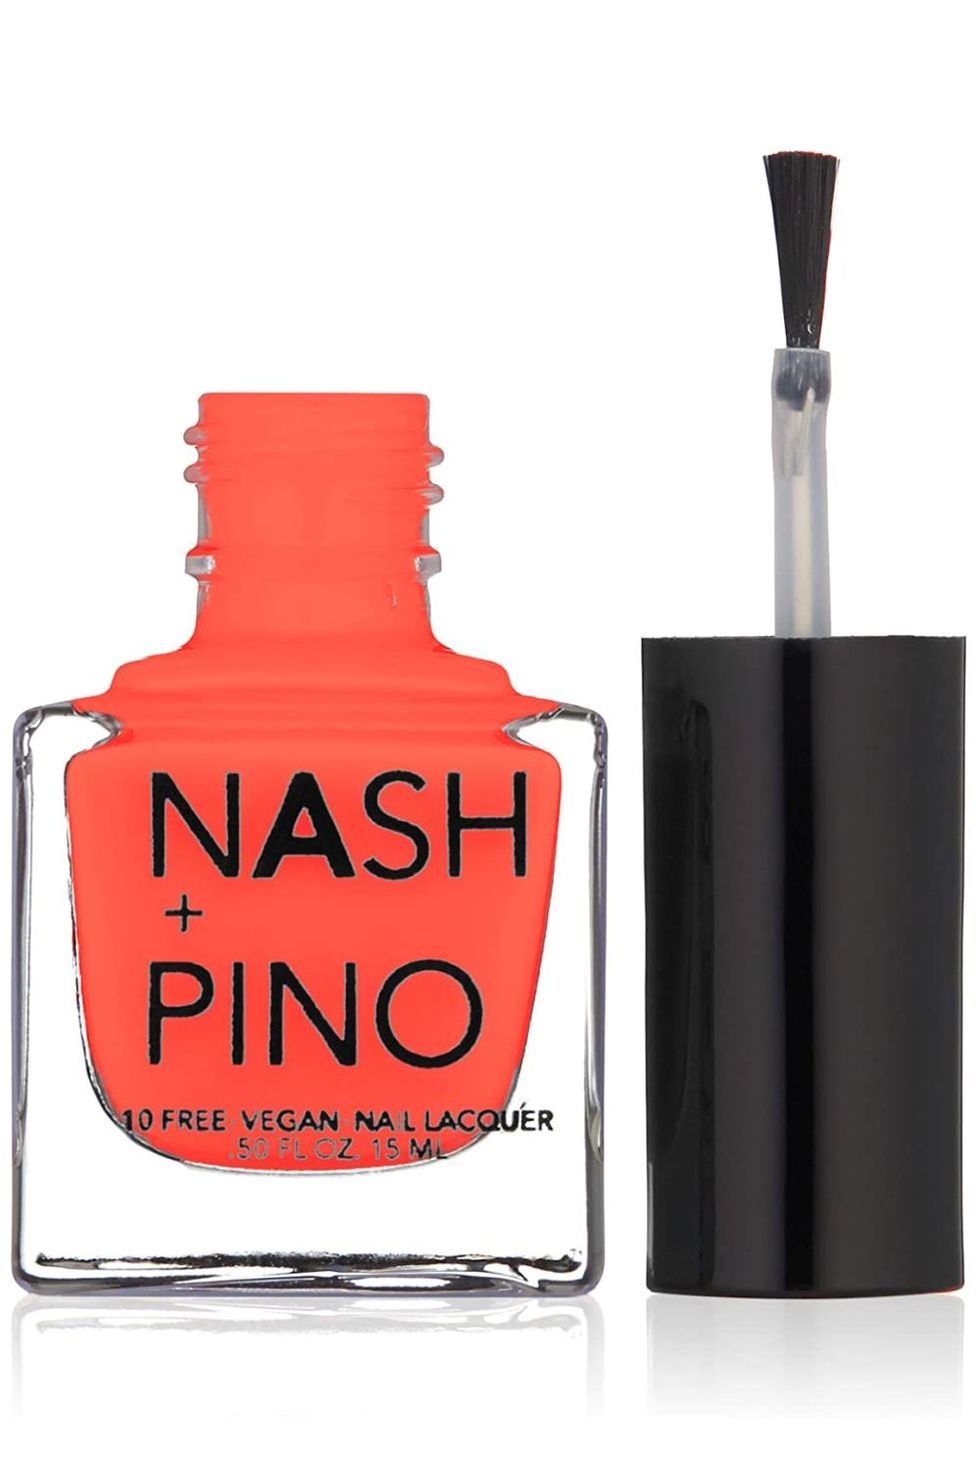 Nash + Pino Vegan Nail Lacquer in Single AF